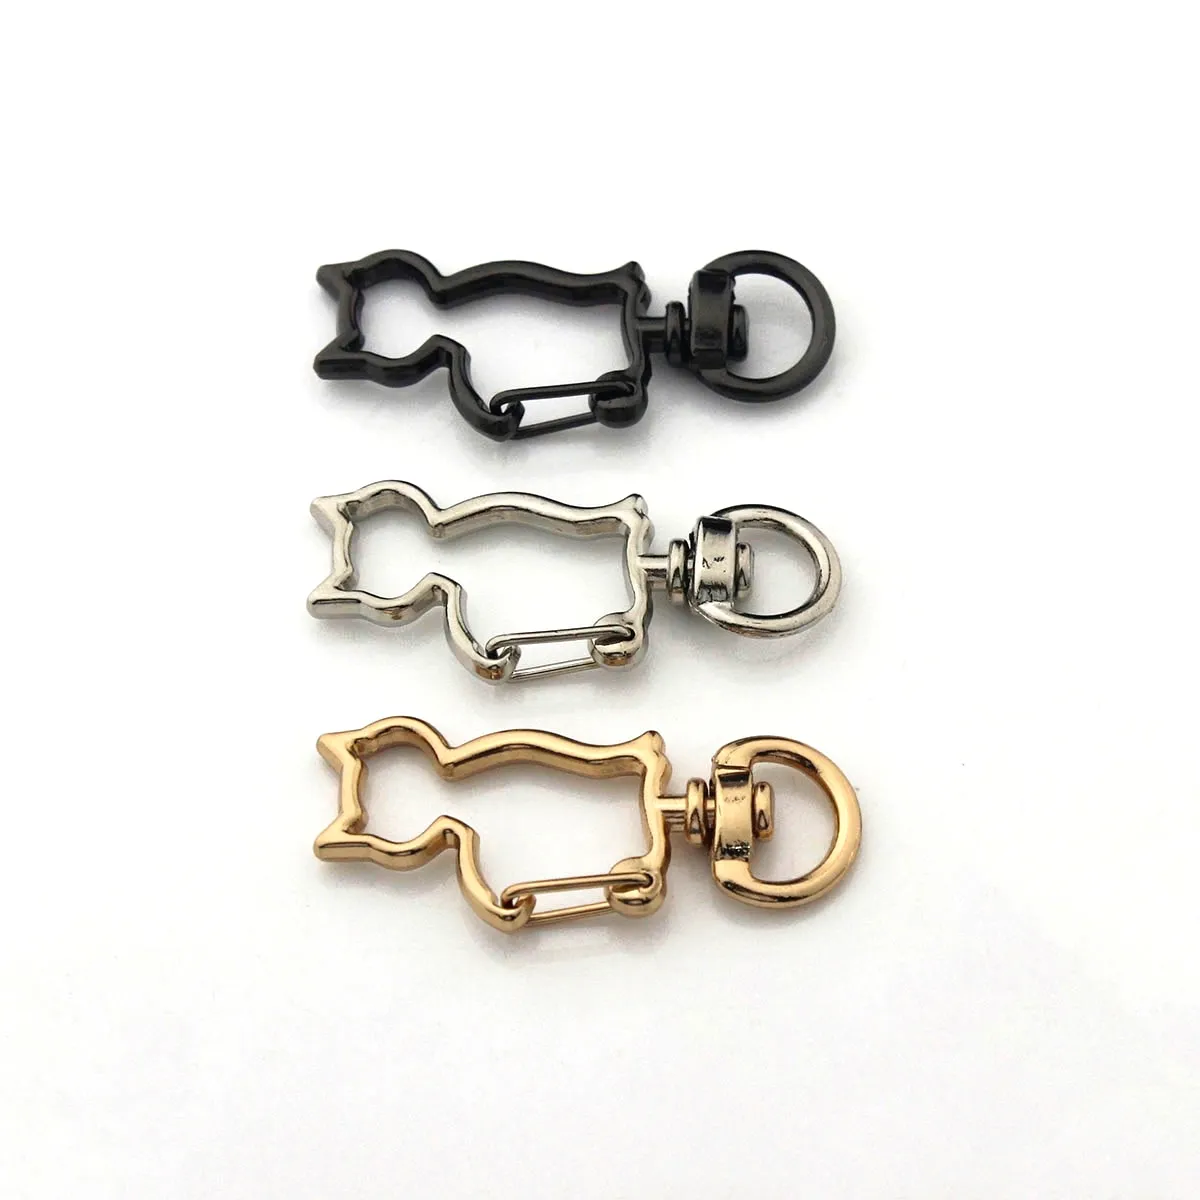 1pcs Metal Cat Shape Snap Hook New Style Clips Spring Gate Leather Craft Tiny Pet Leash Bag Strap Webbing Keychain Hooks DIY